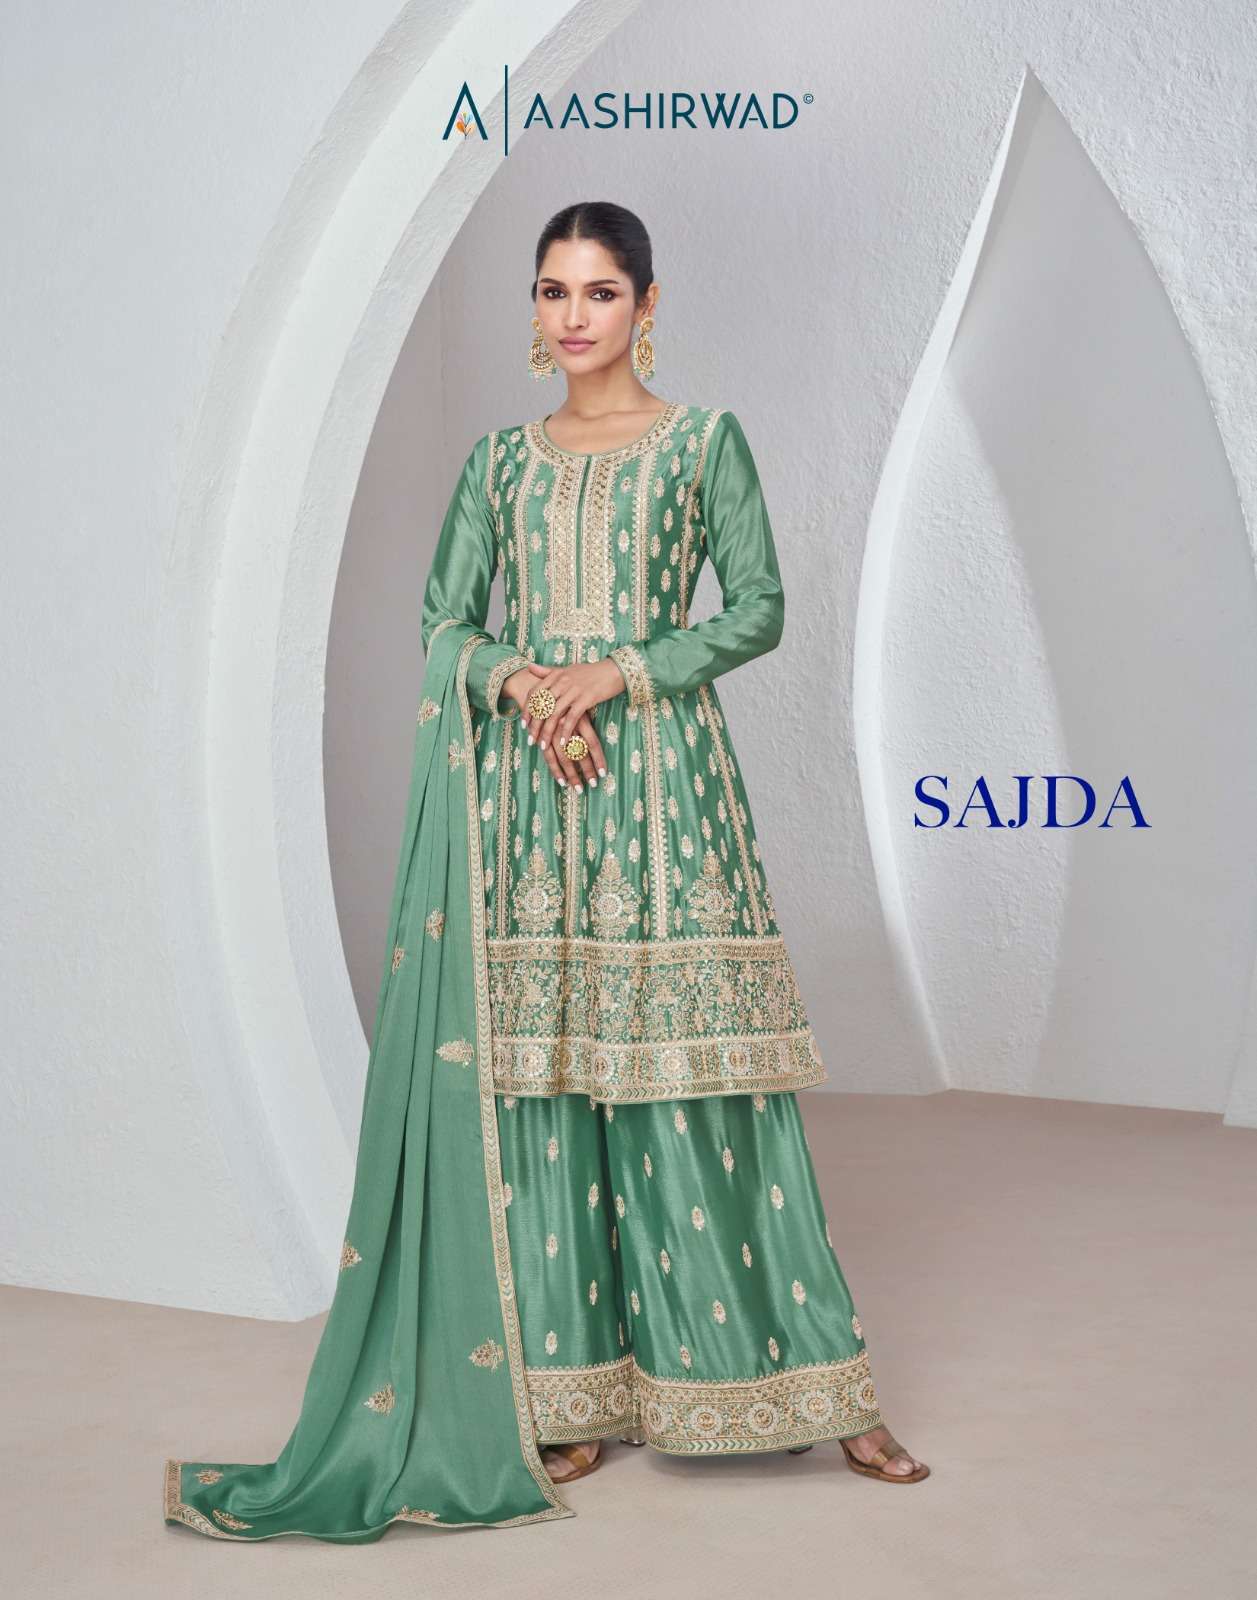 Aashirwad Sajda 9959 To 9961 Latest Designer Partywear Suit Catalog Suppliers